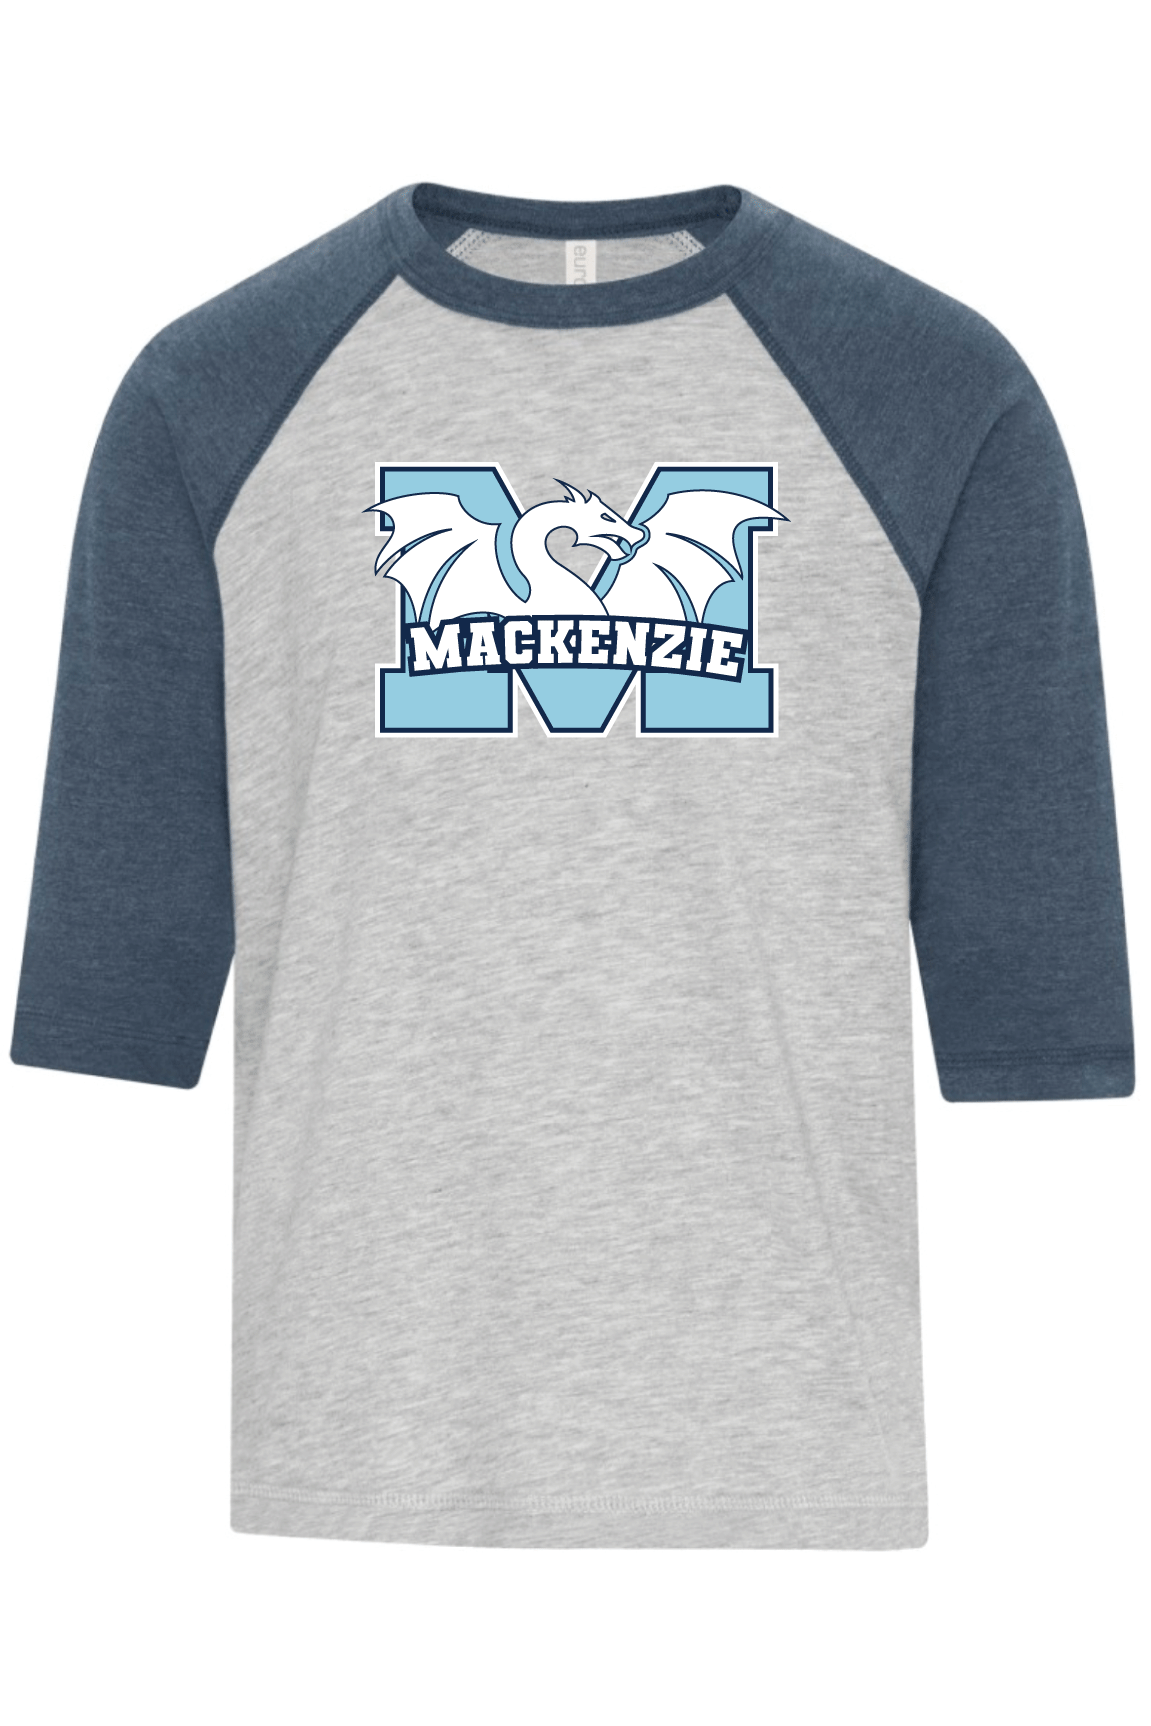 Mackenzie Adult Baseball T-Shirt (M Dragon Logo) - Oddball Workshop